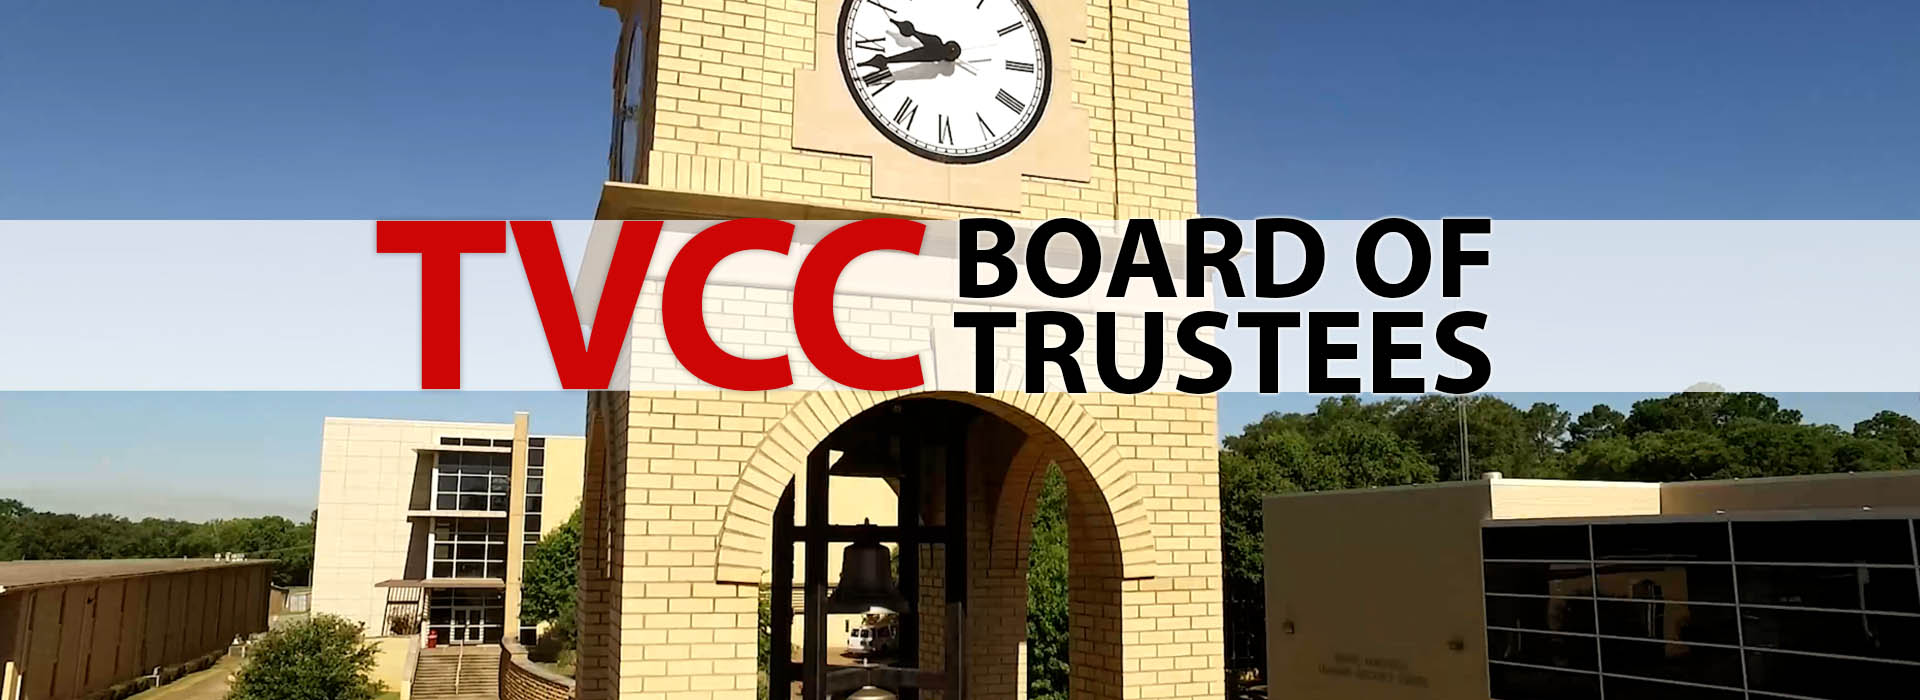 TVCC Board of Trustees